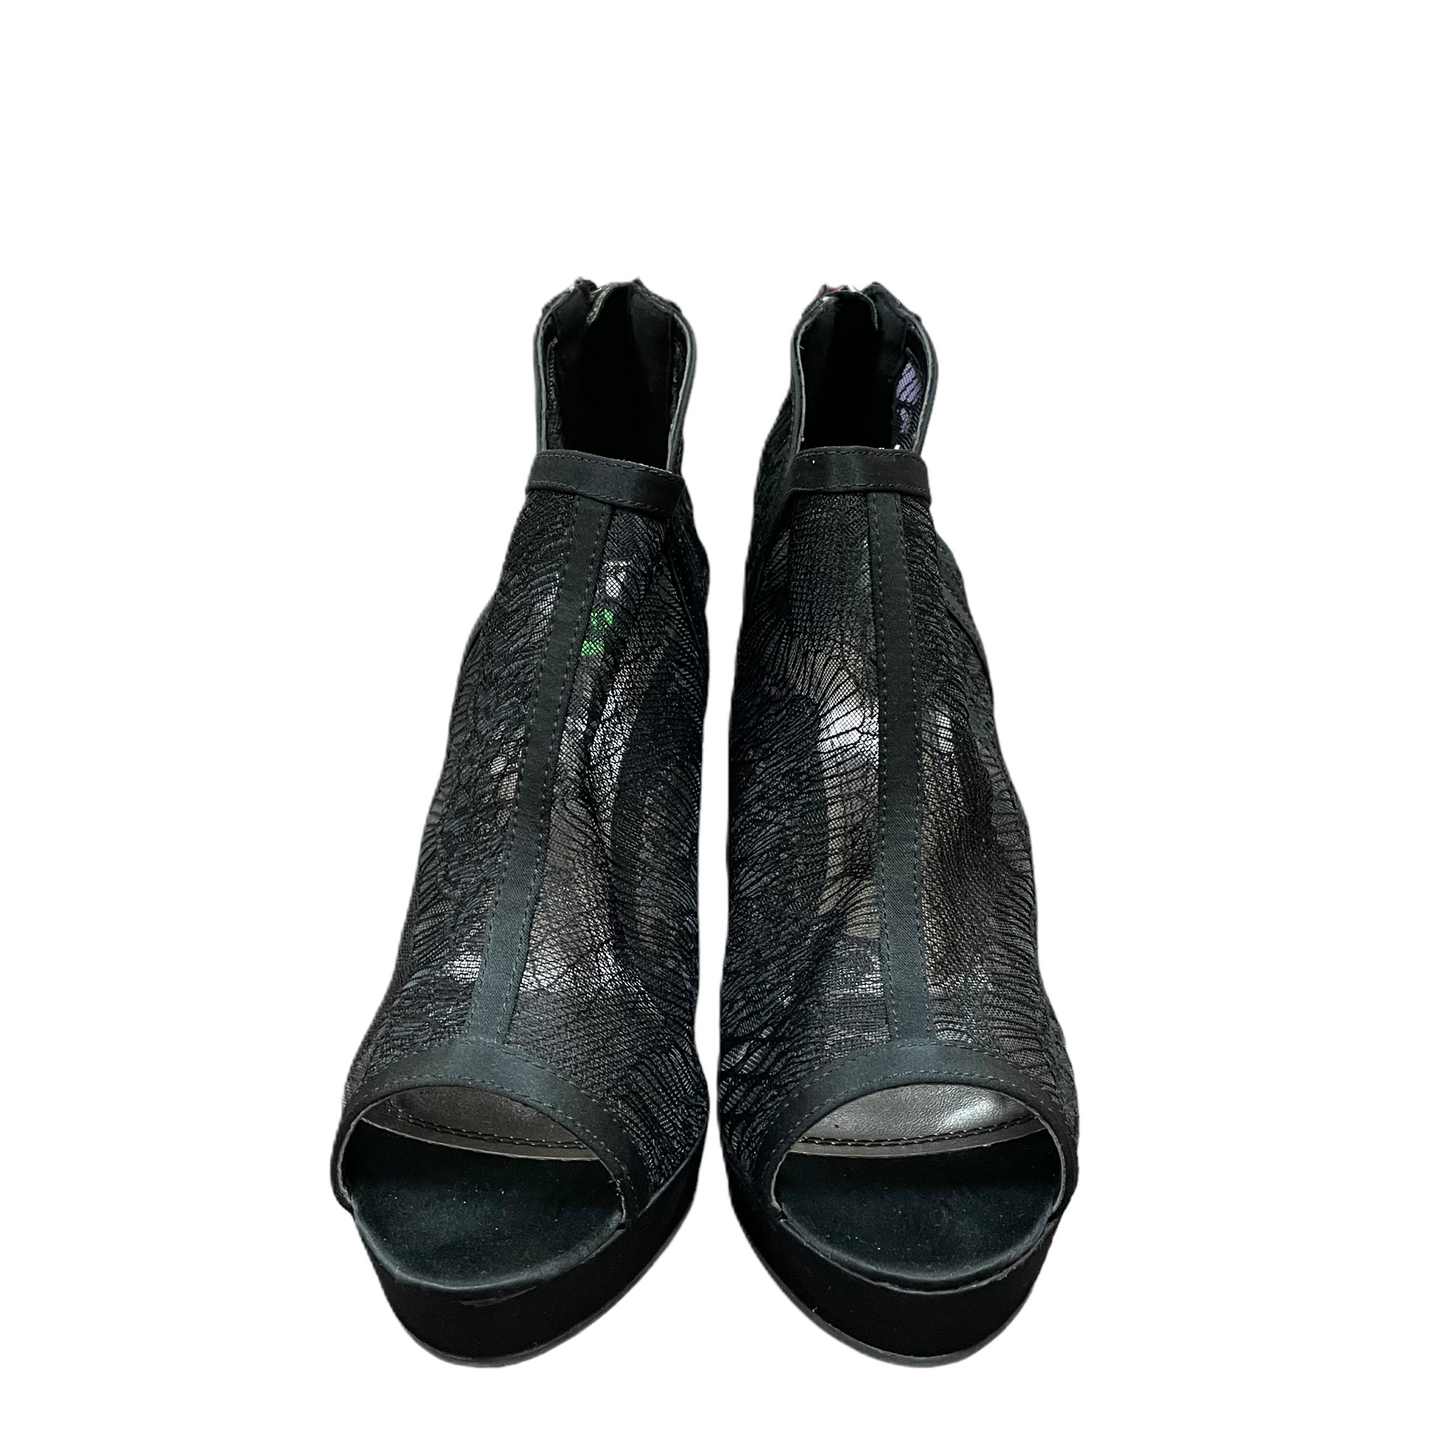 Black Shoes Heels Stiletto By Anne Michelle, Size: 10